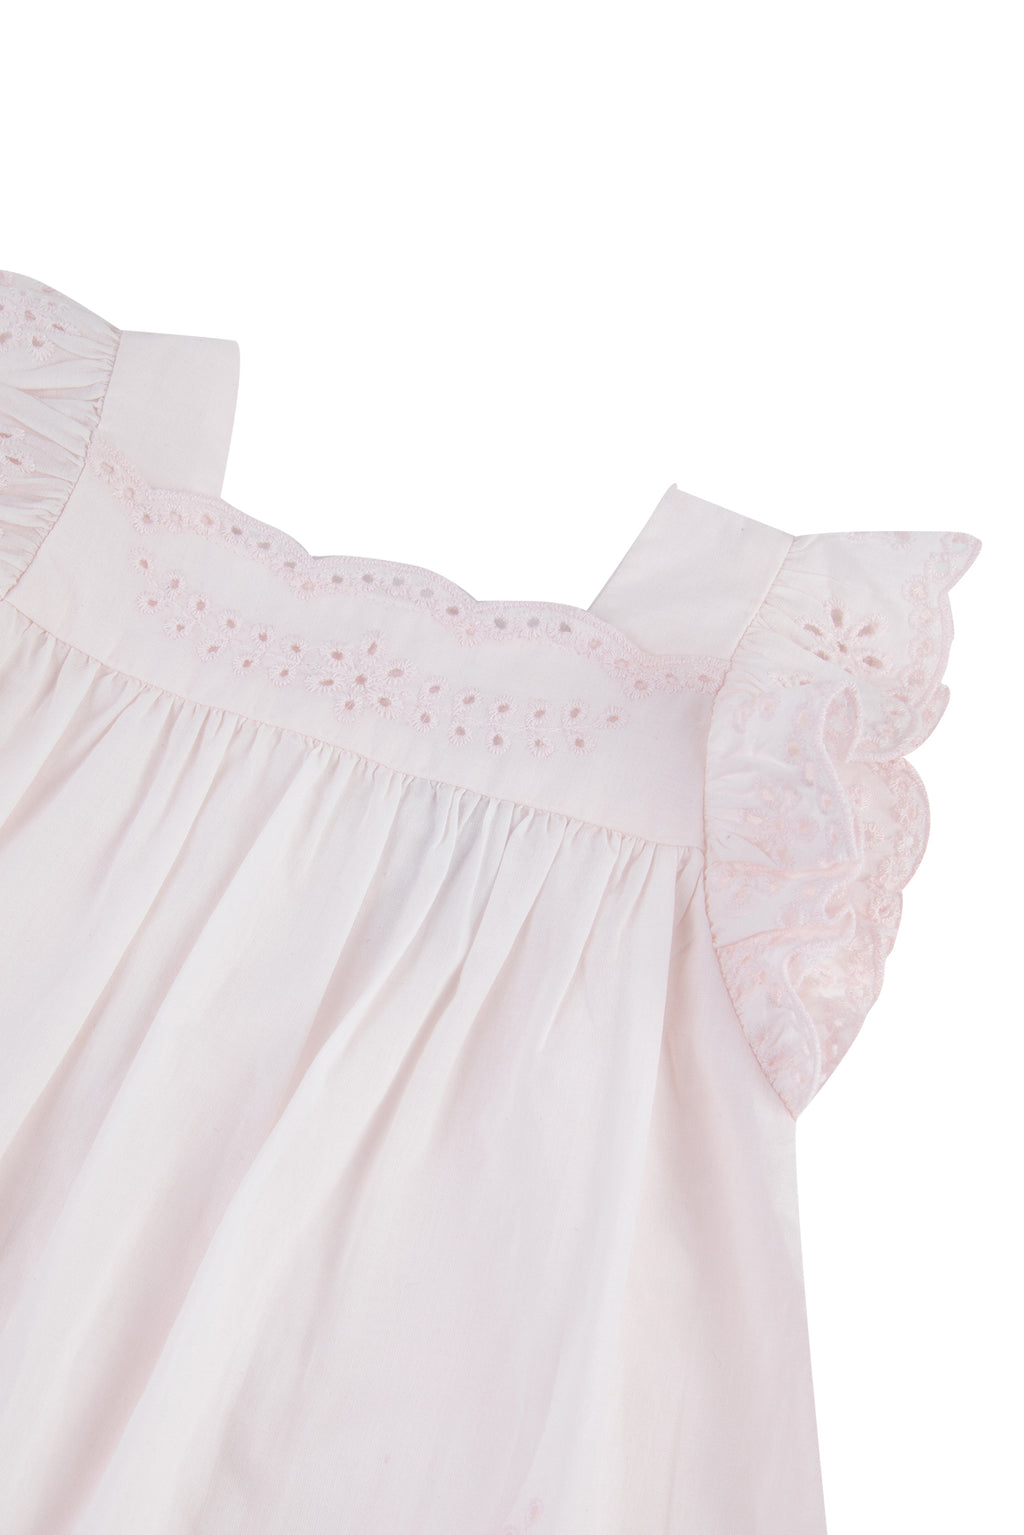 Dress - Pale pink English embroidery